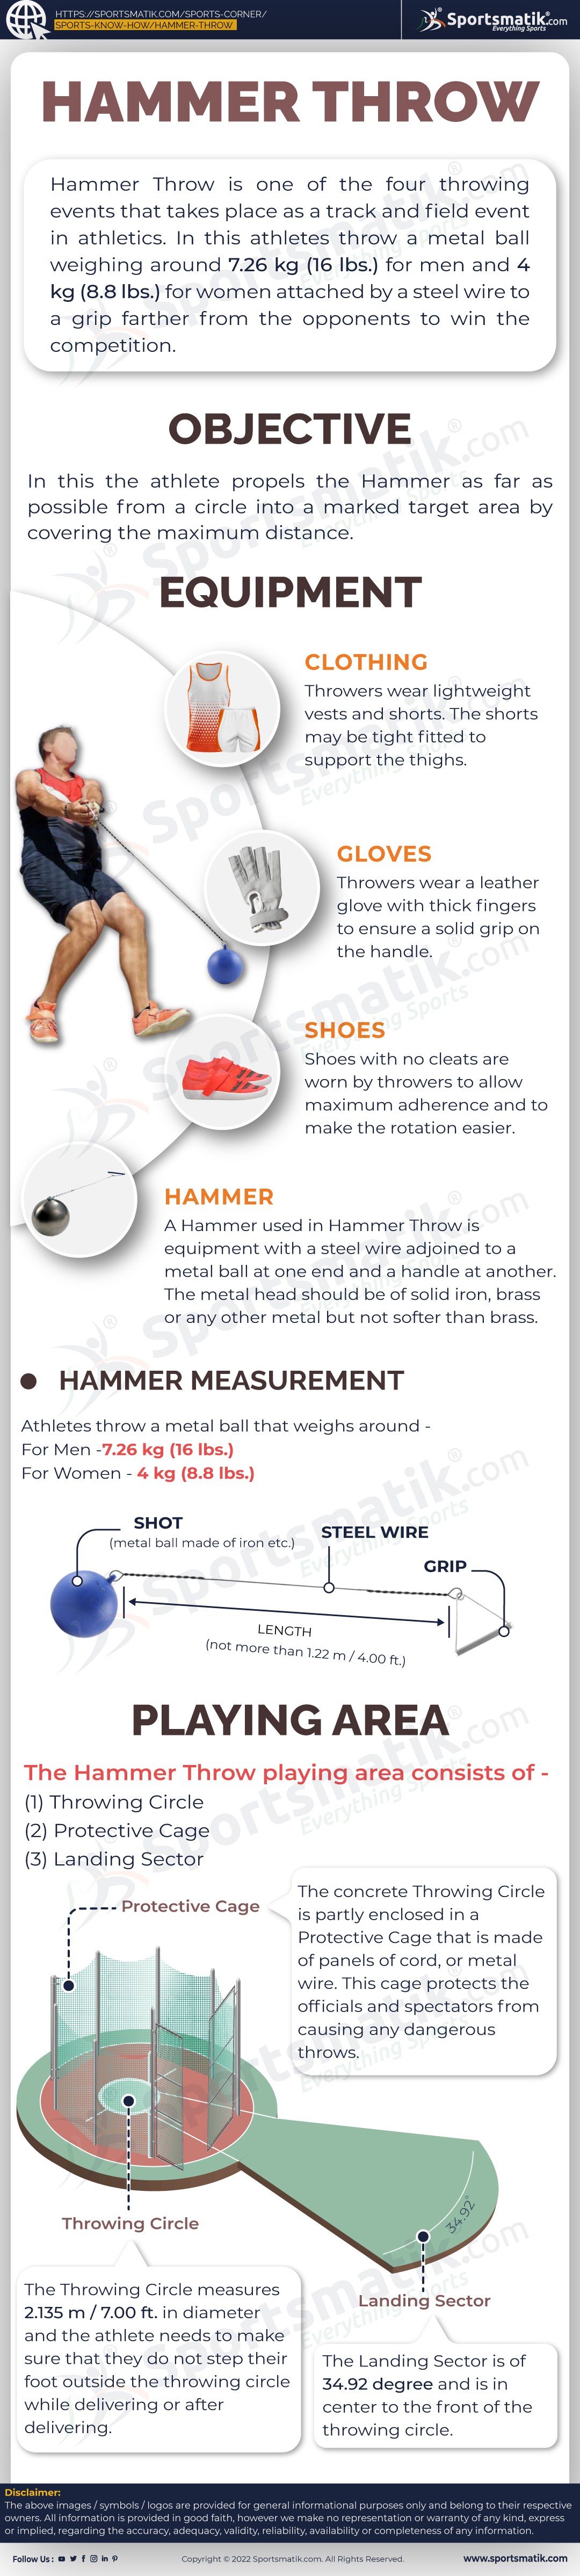 Hammer Throw Equipment